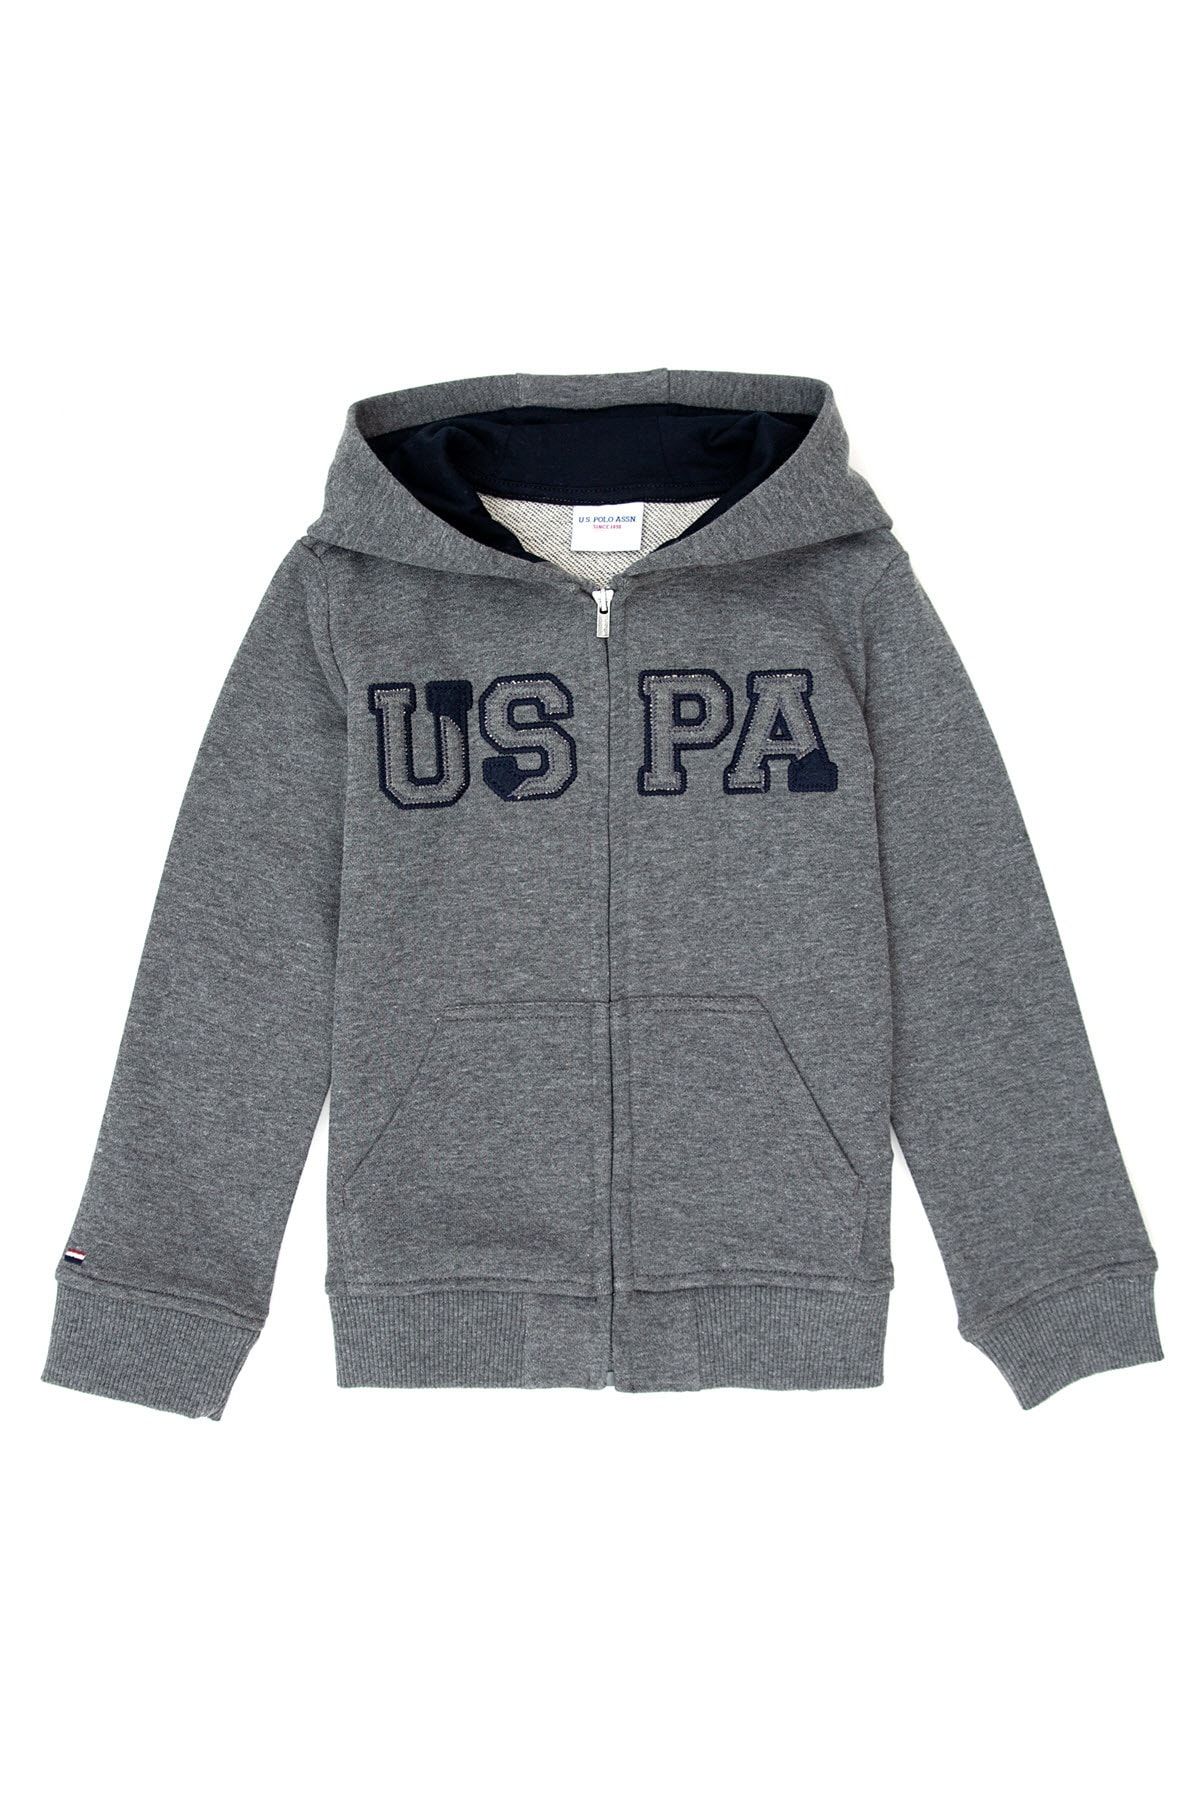 U.S. Polo Assn. Gri Erkek Çocuk Sweatshirt